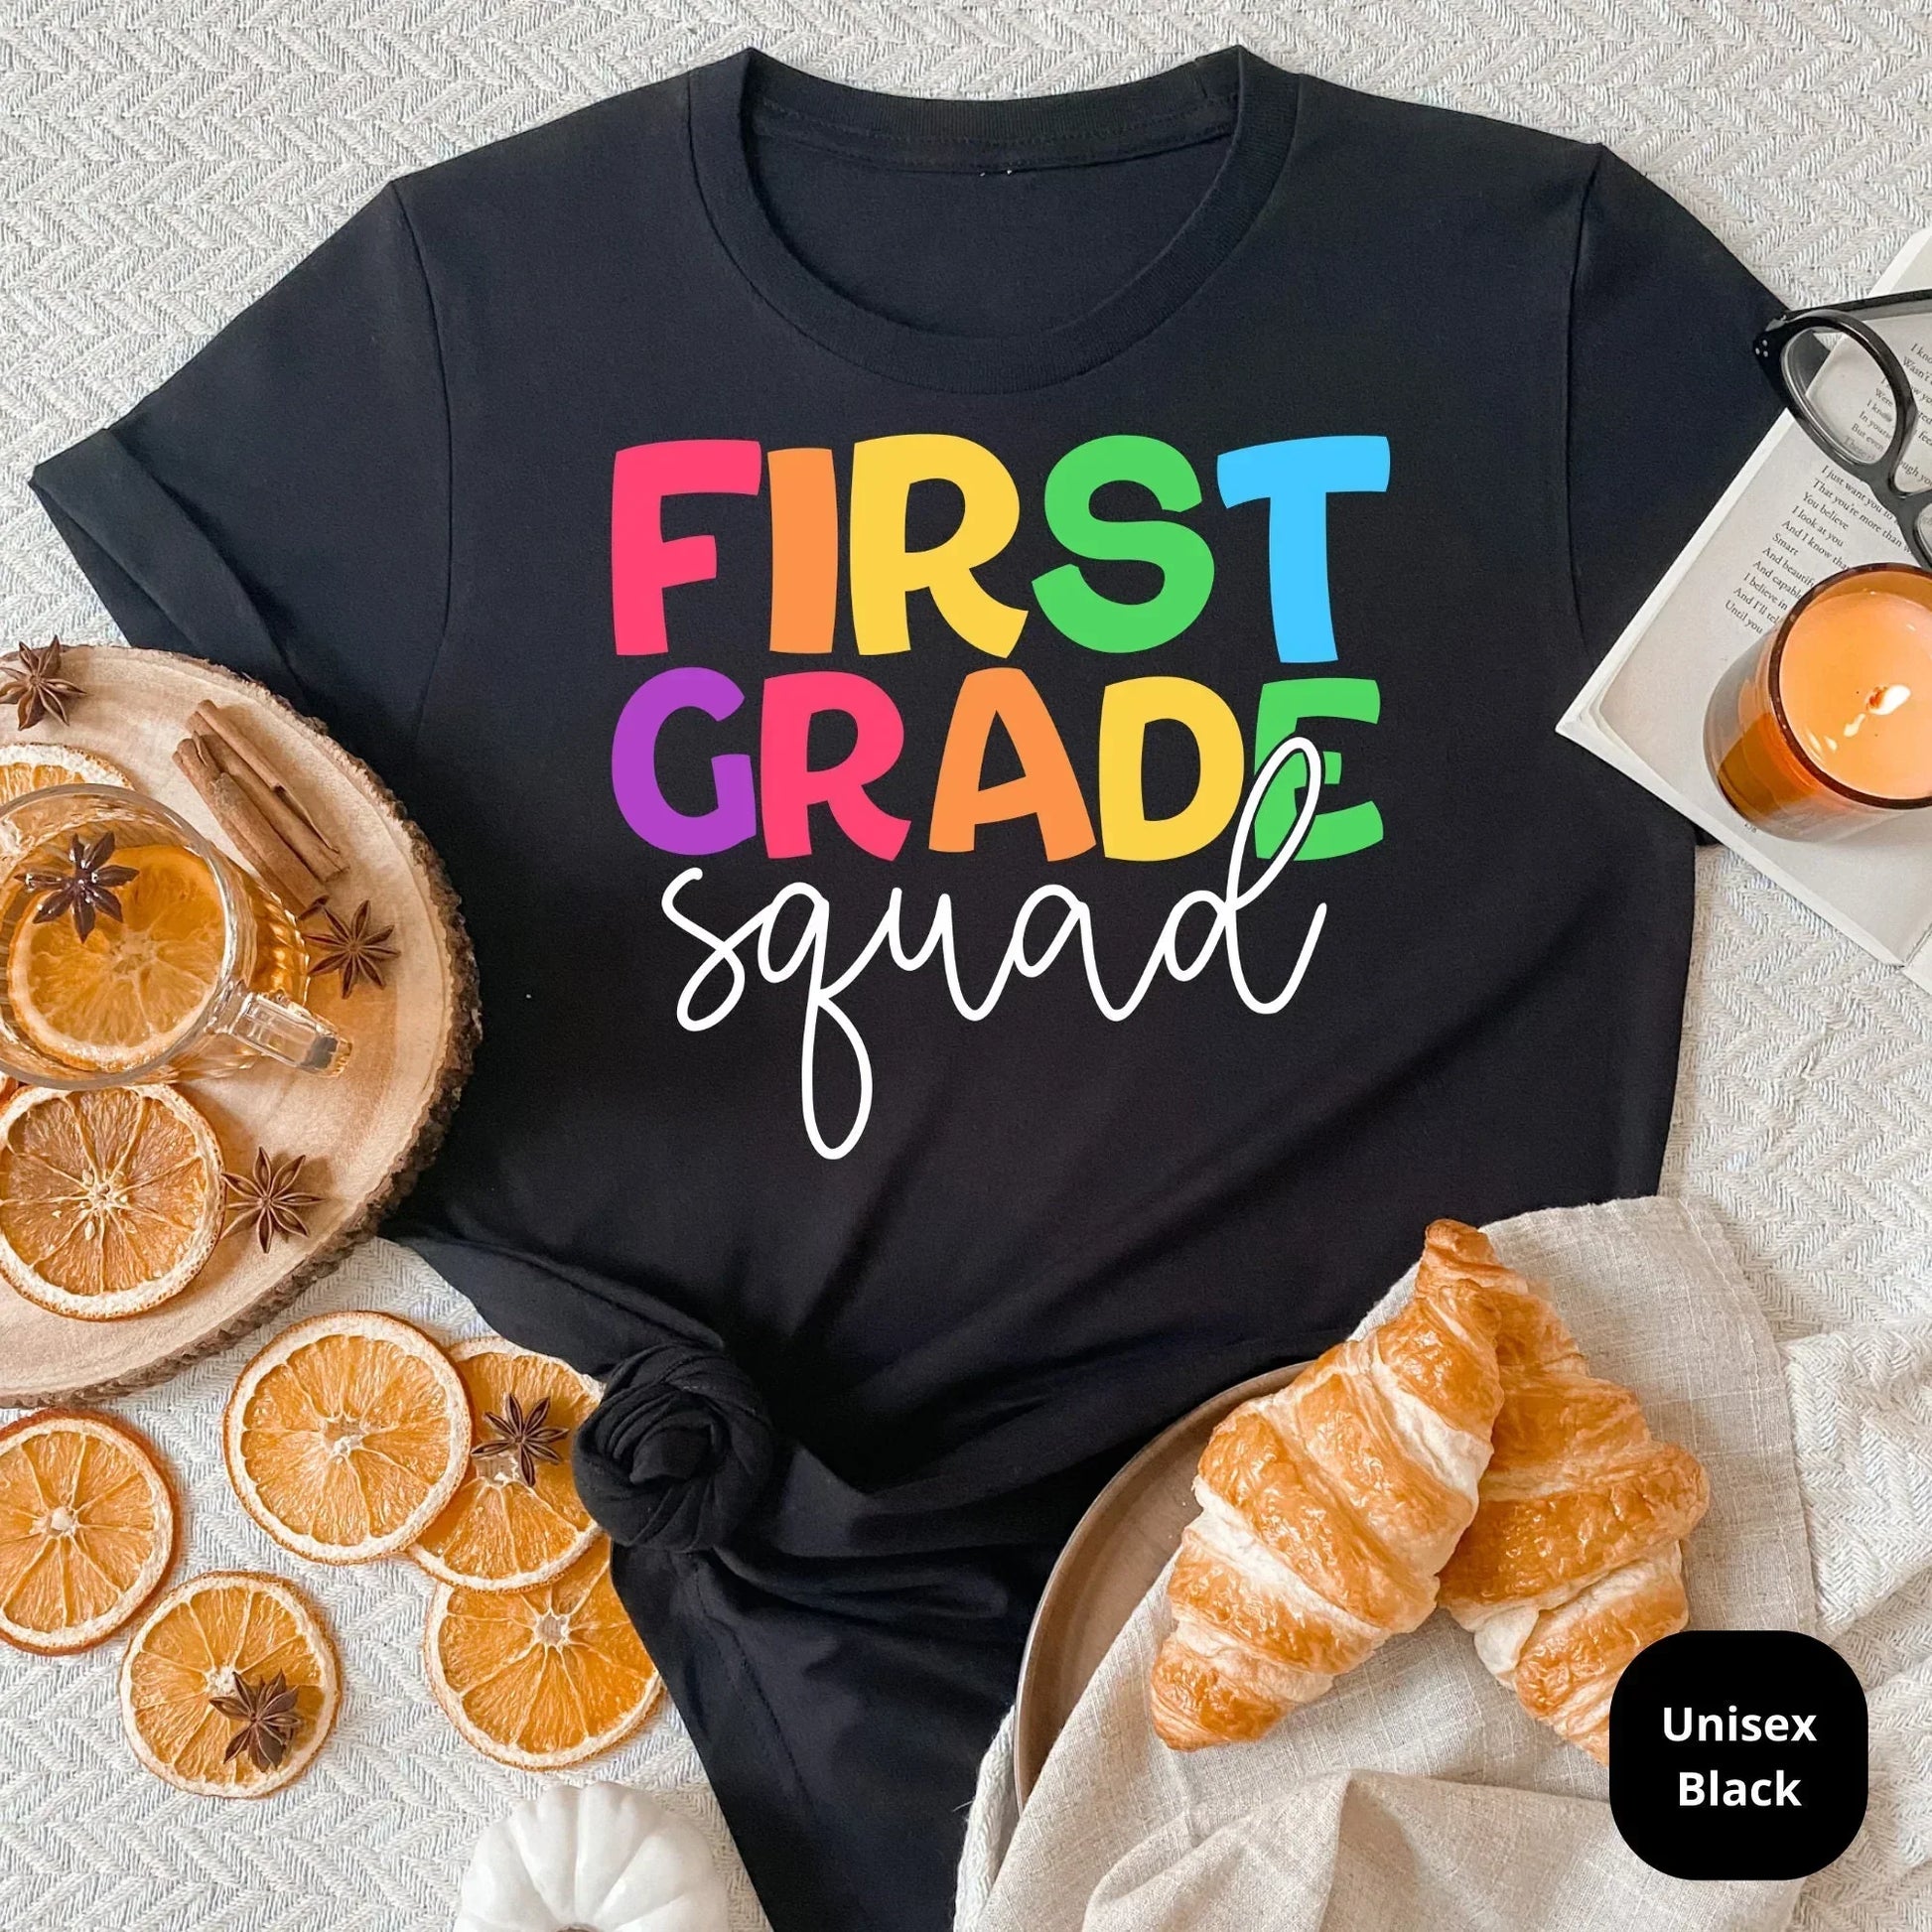 1st grade squad shirt, 1st grade team shirts